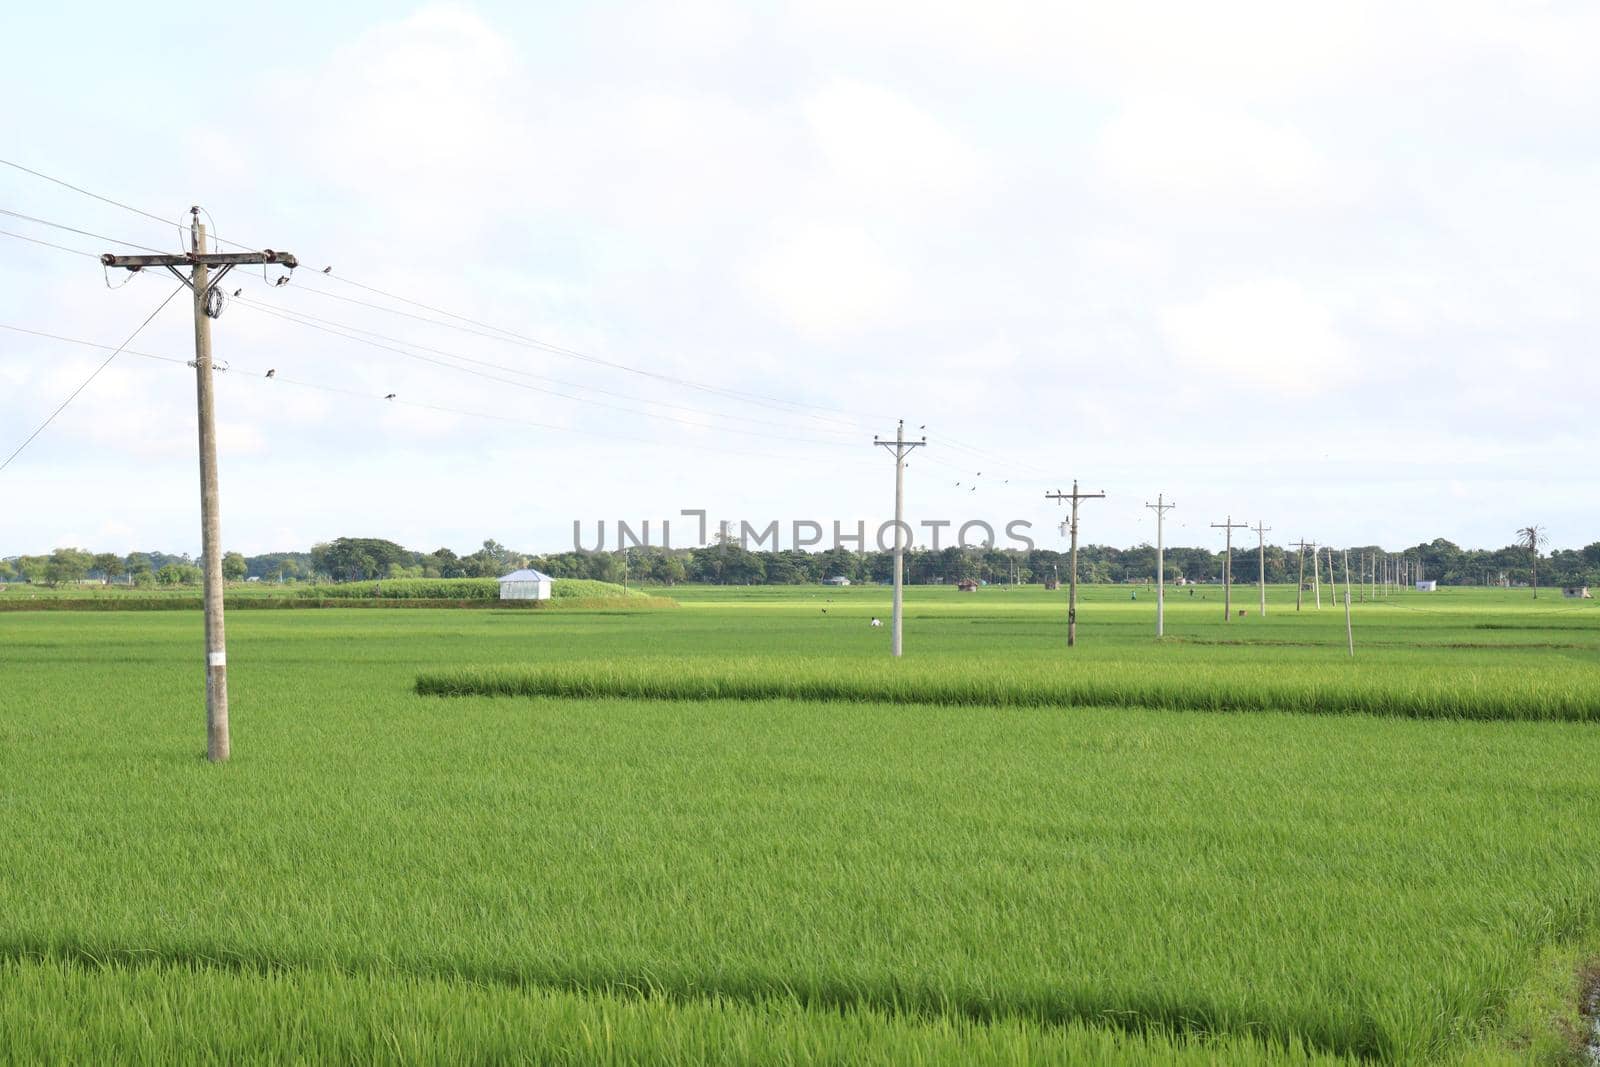 green colored paddy farm on field by jahidul2358